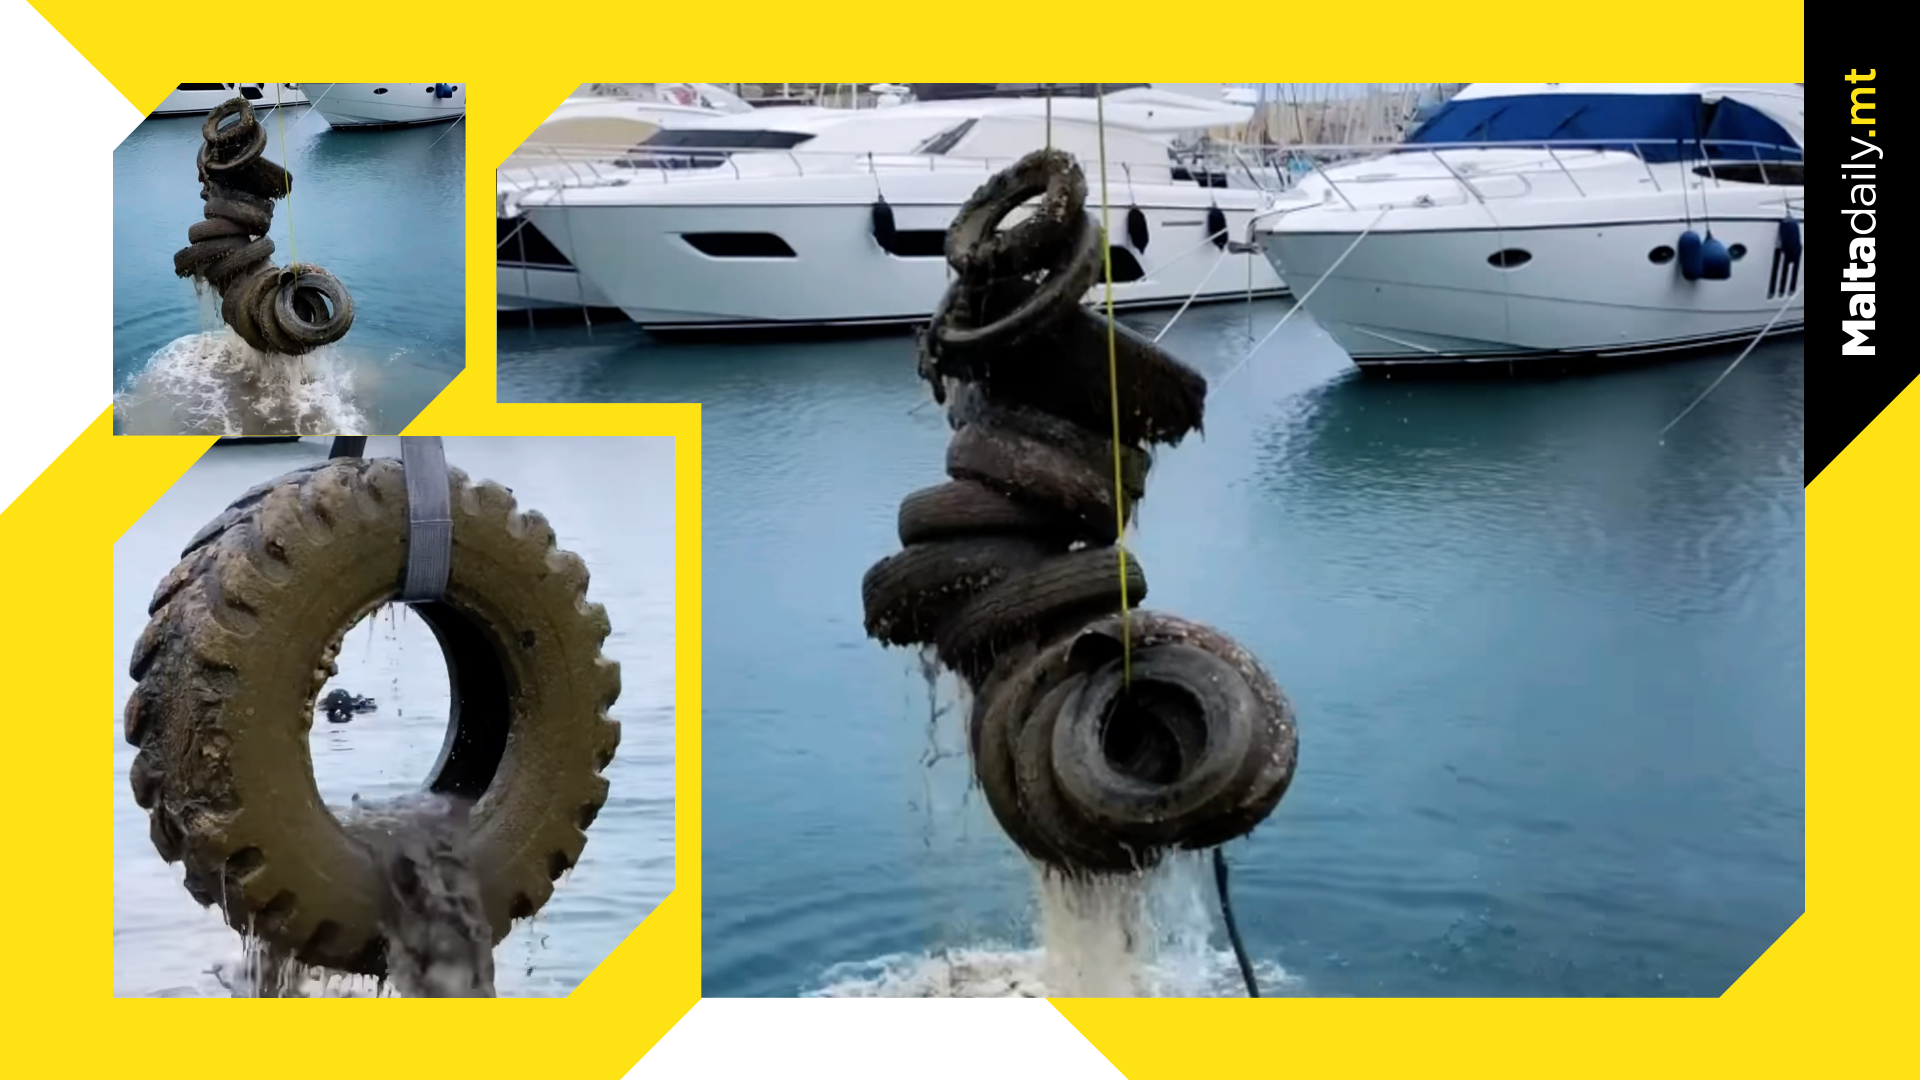 Zibel picks up 248 tyres in latest Gardens Yacht Marina clean up